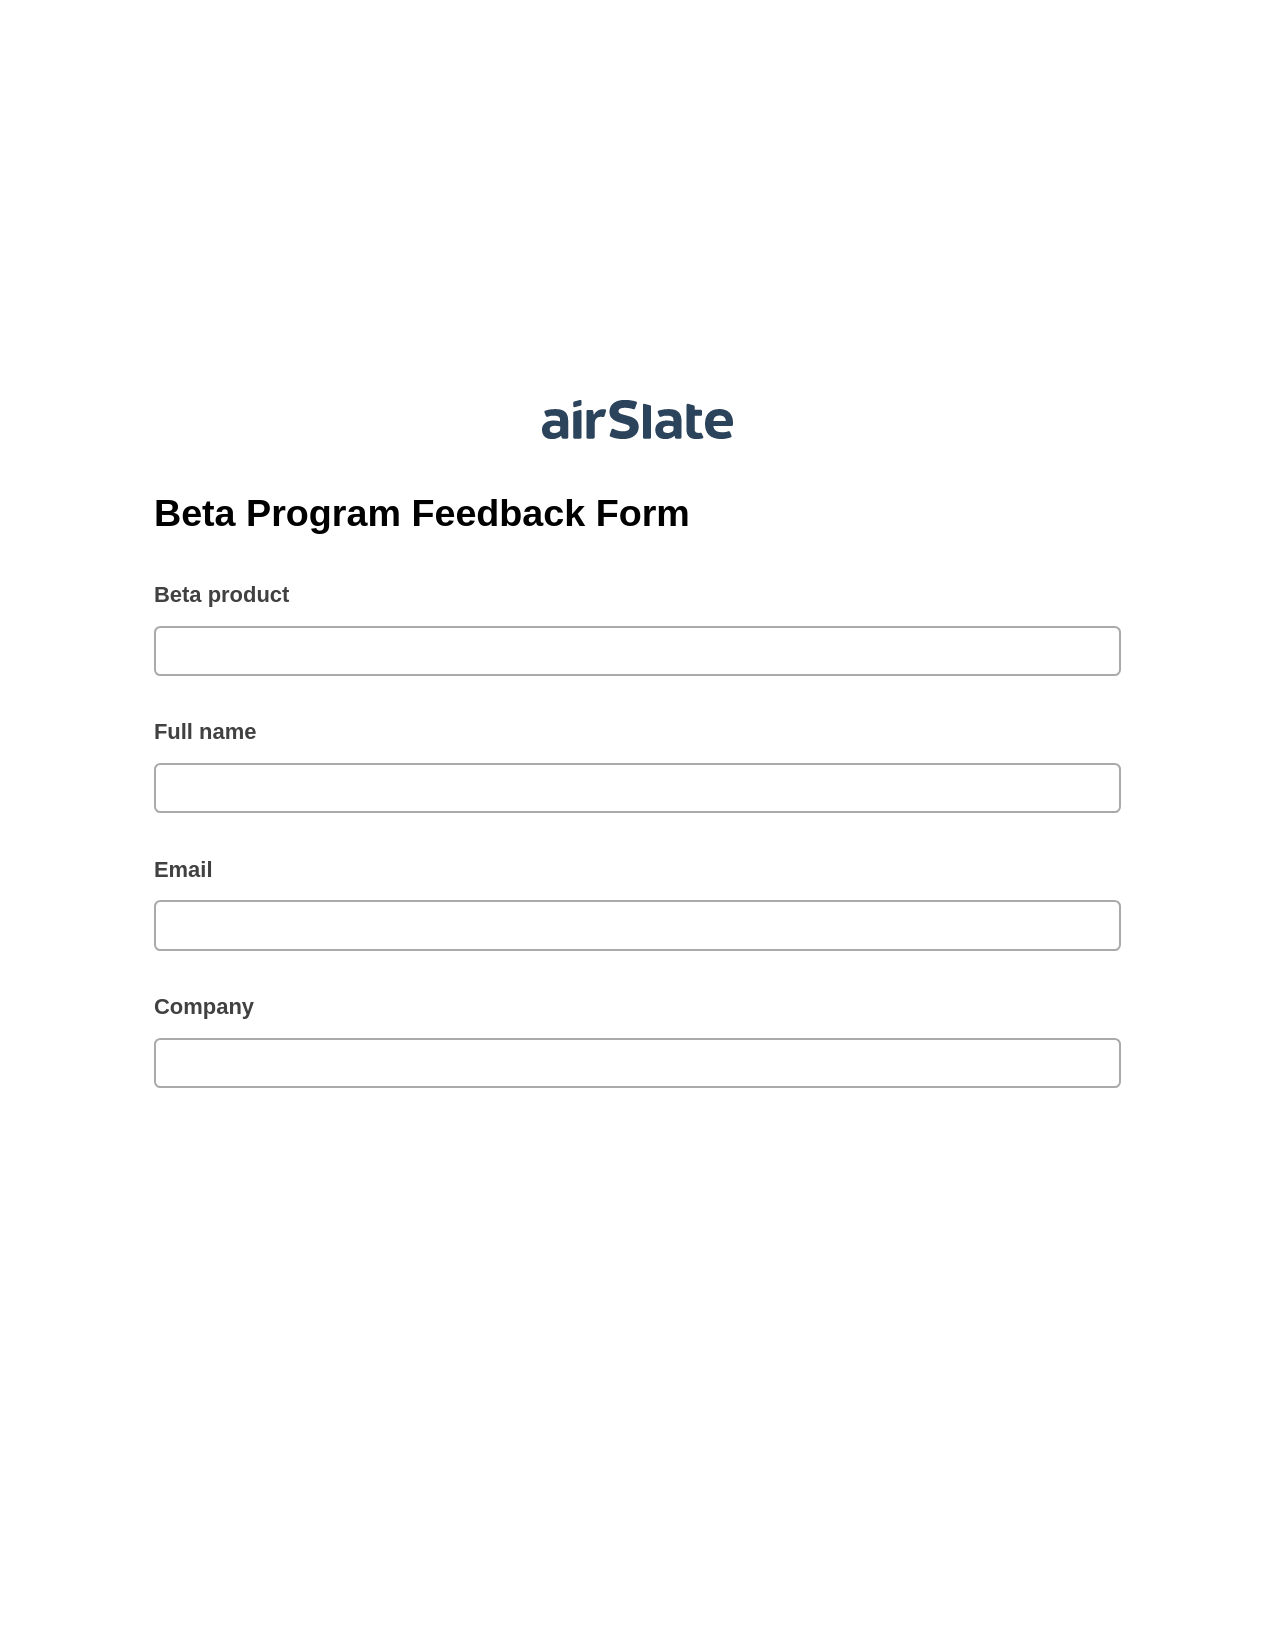 Beta Program Feedback Form Pre-fill from Excel Spreadsheet Bot, Webhook Bot, Export to Smartsheet